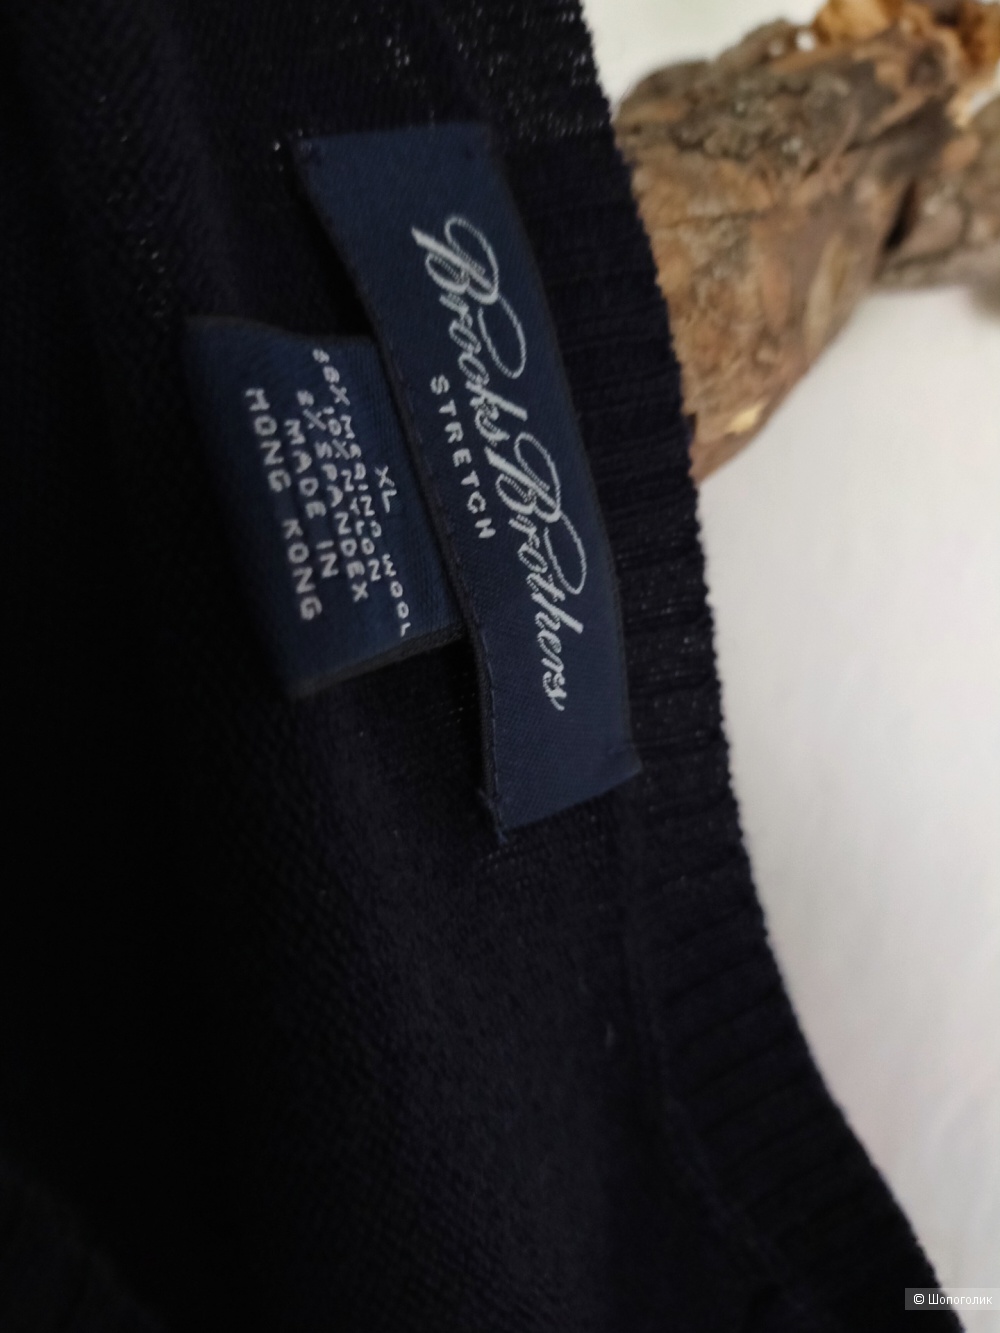 Пуловер Brooks Brothers, цвет синий, размер M / L / XL